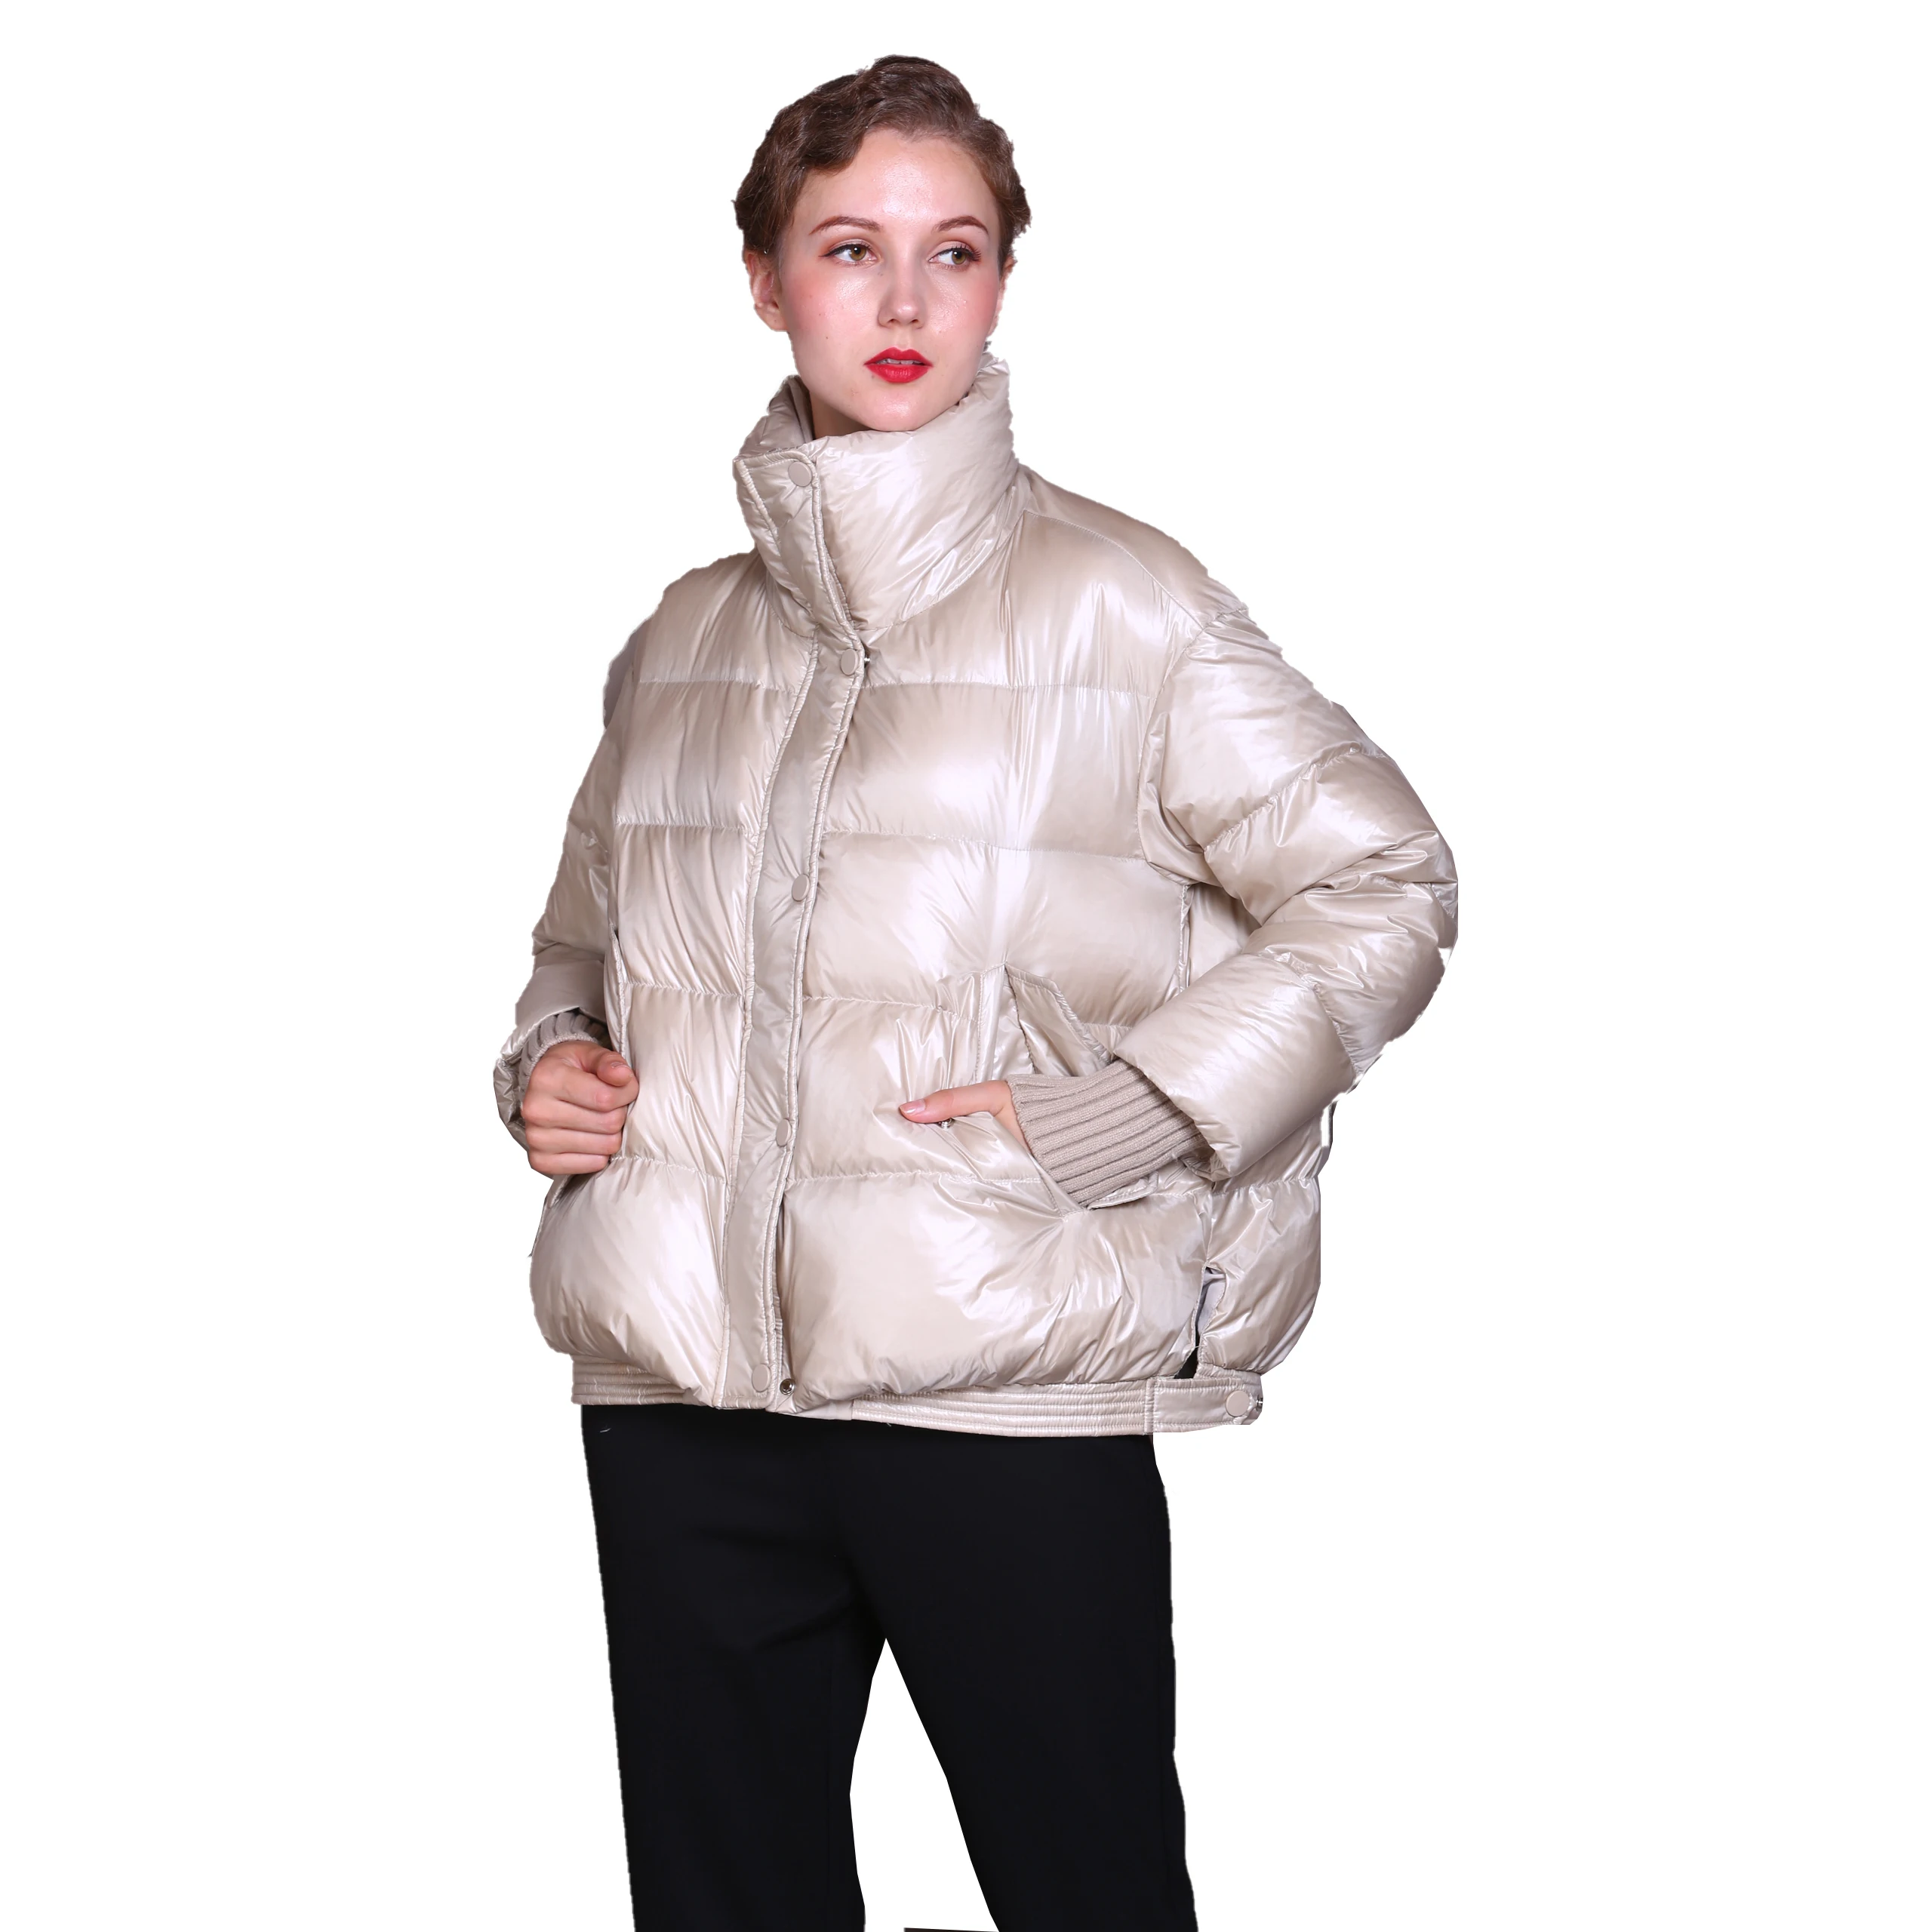 Hot sale ladies/women fashion design printed fashionations woman clothing down jacket